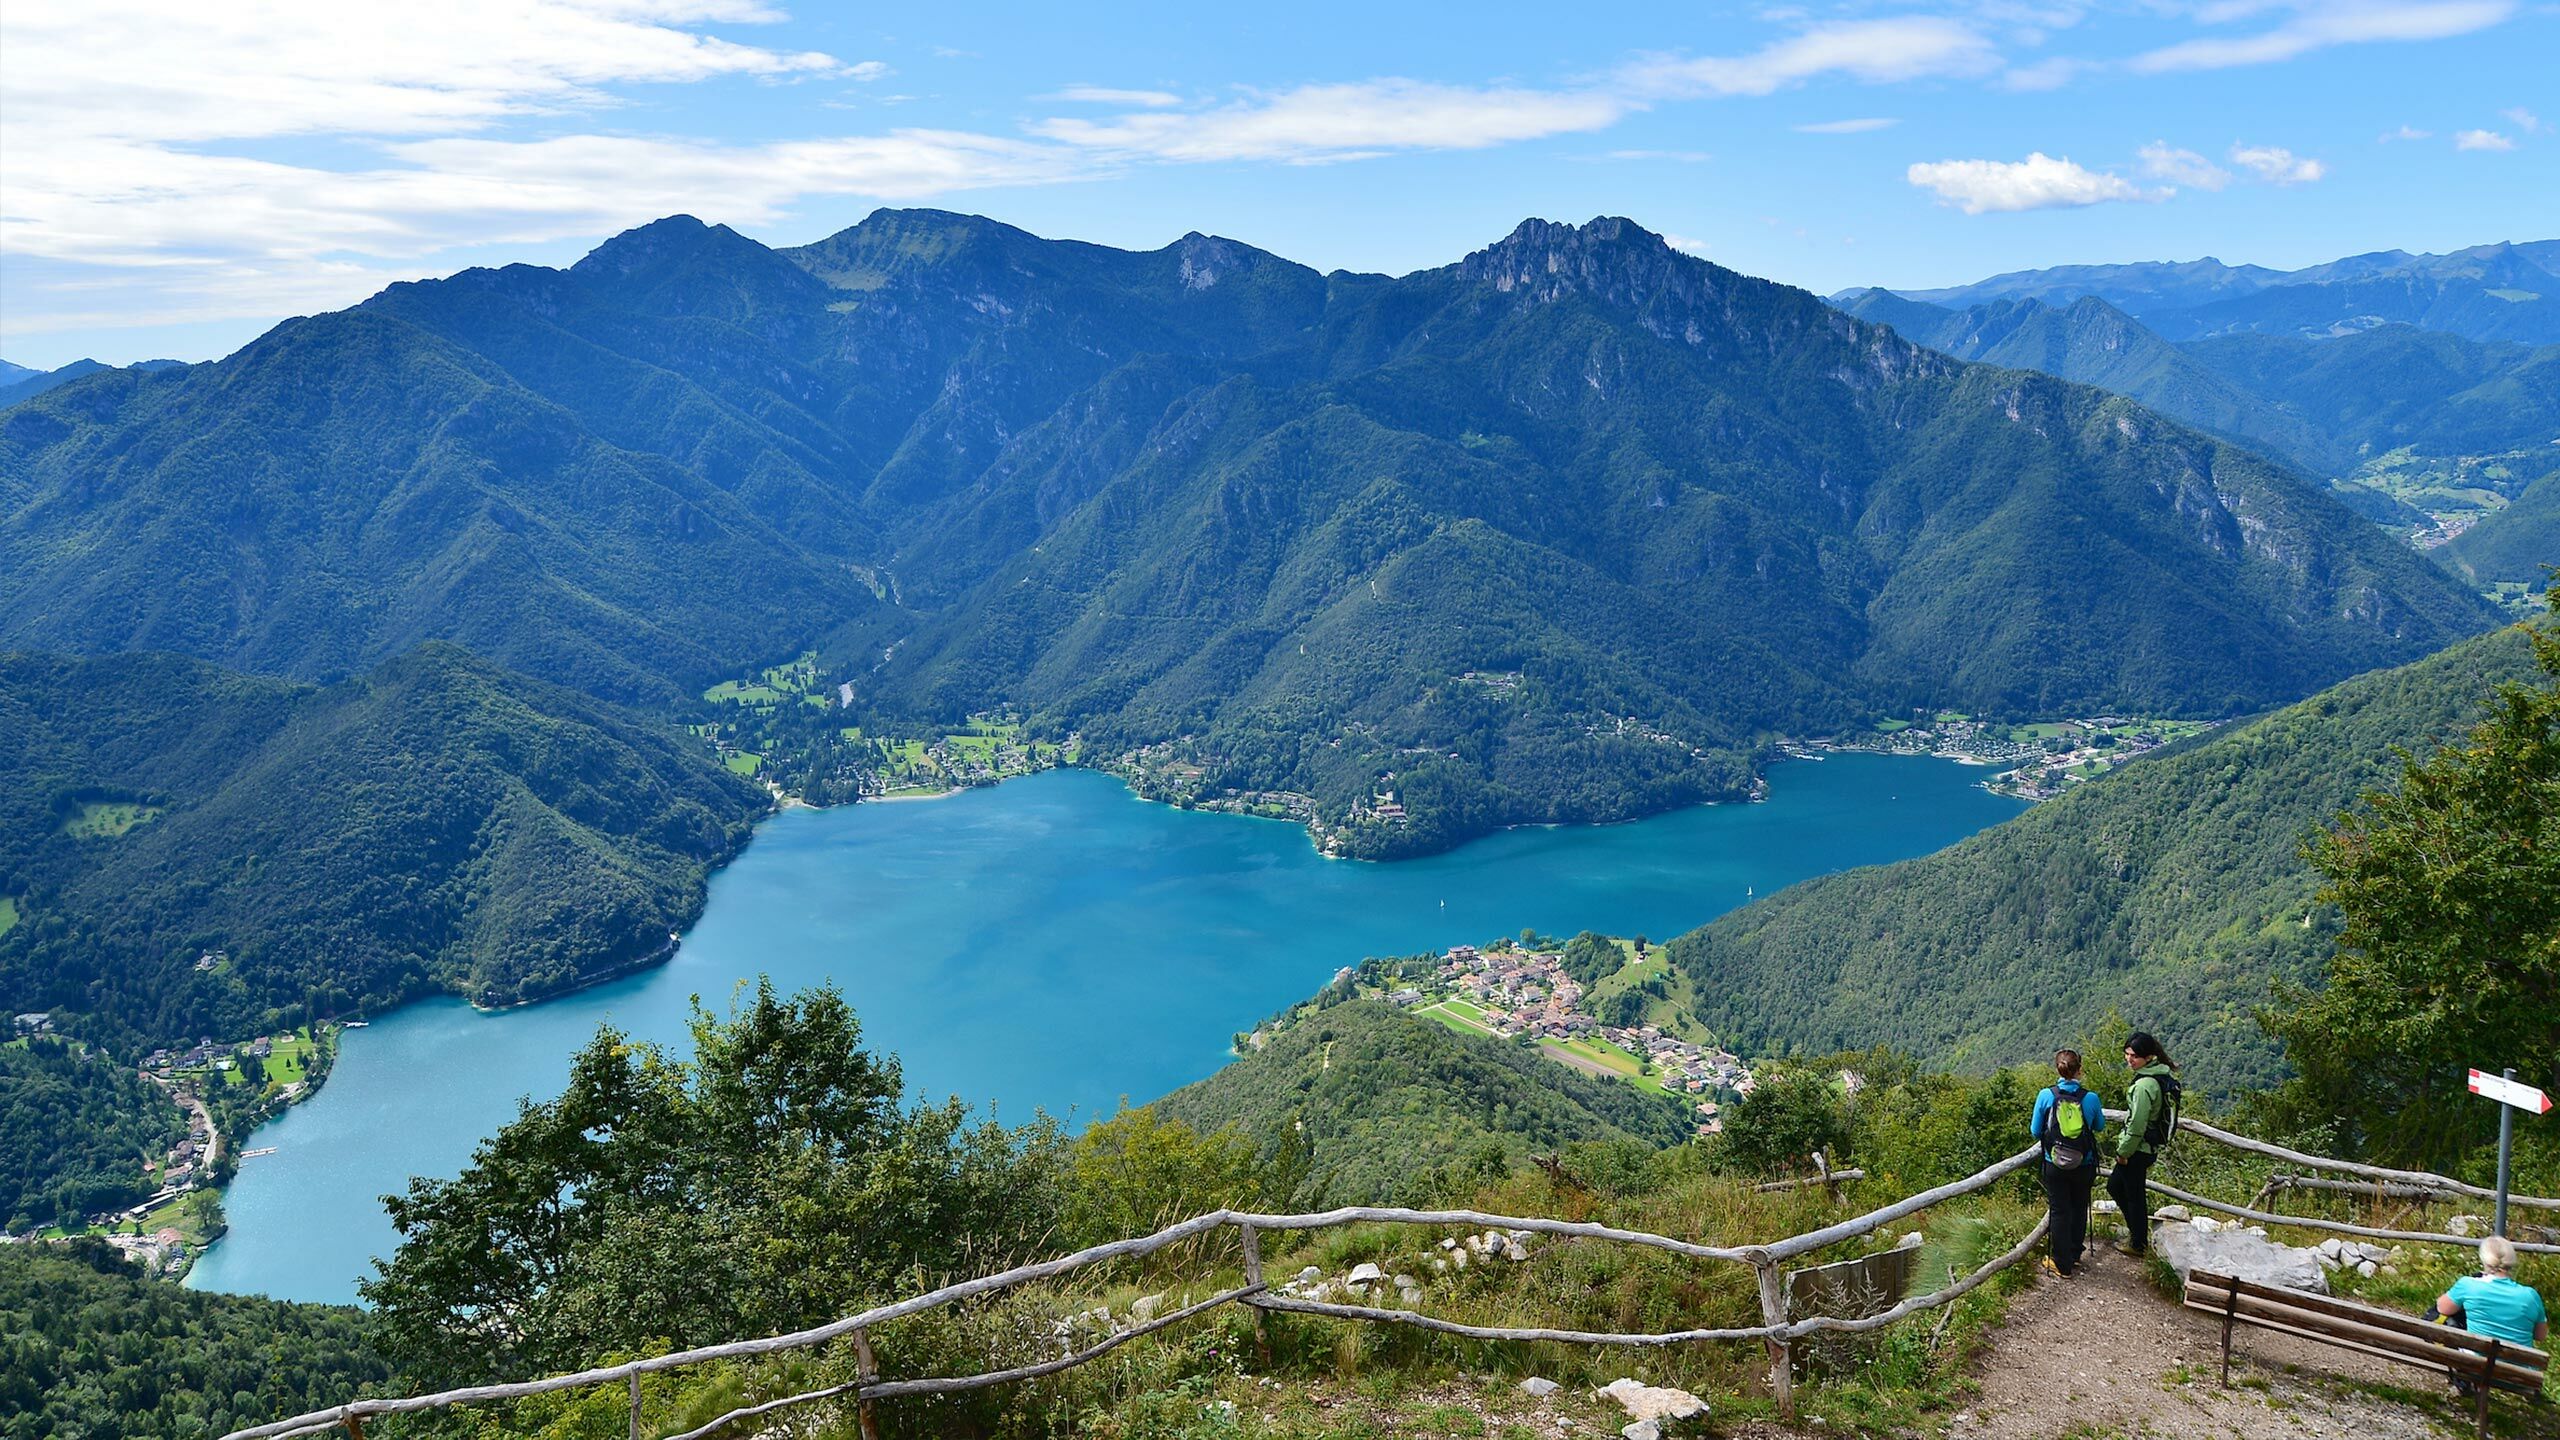 Crosina Holiday - apartment near Lake Ledro in Trentino for a family or family holiday Location and surrounding in Ledro Valley